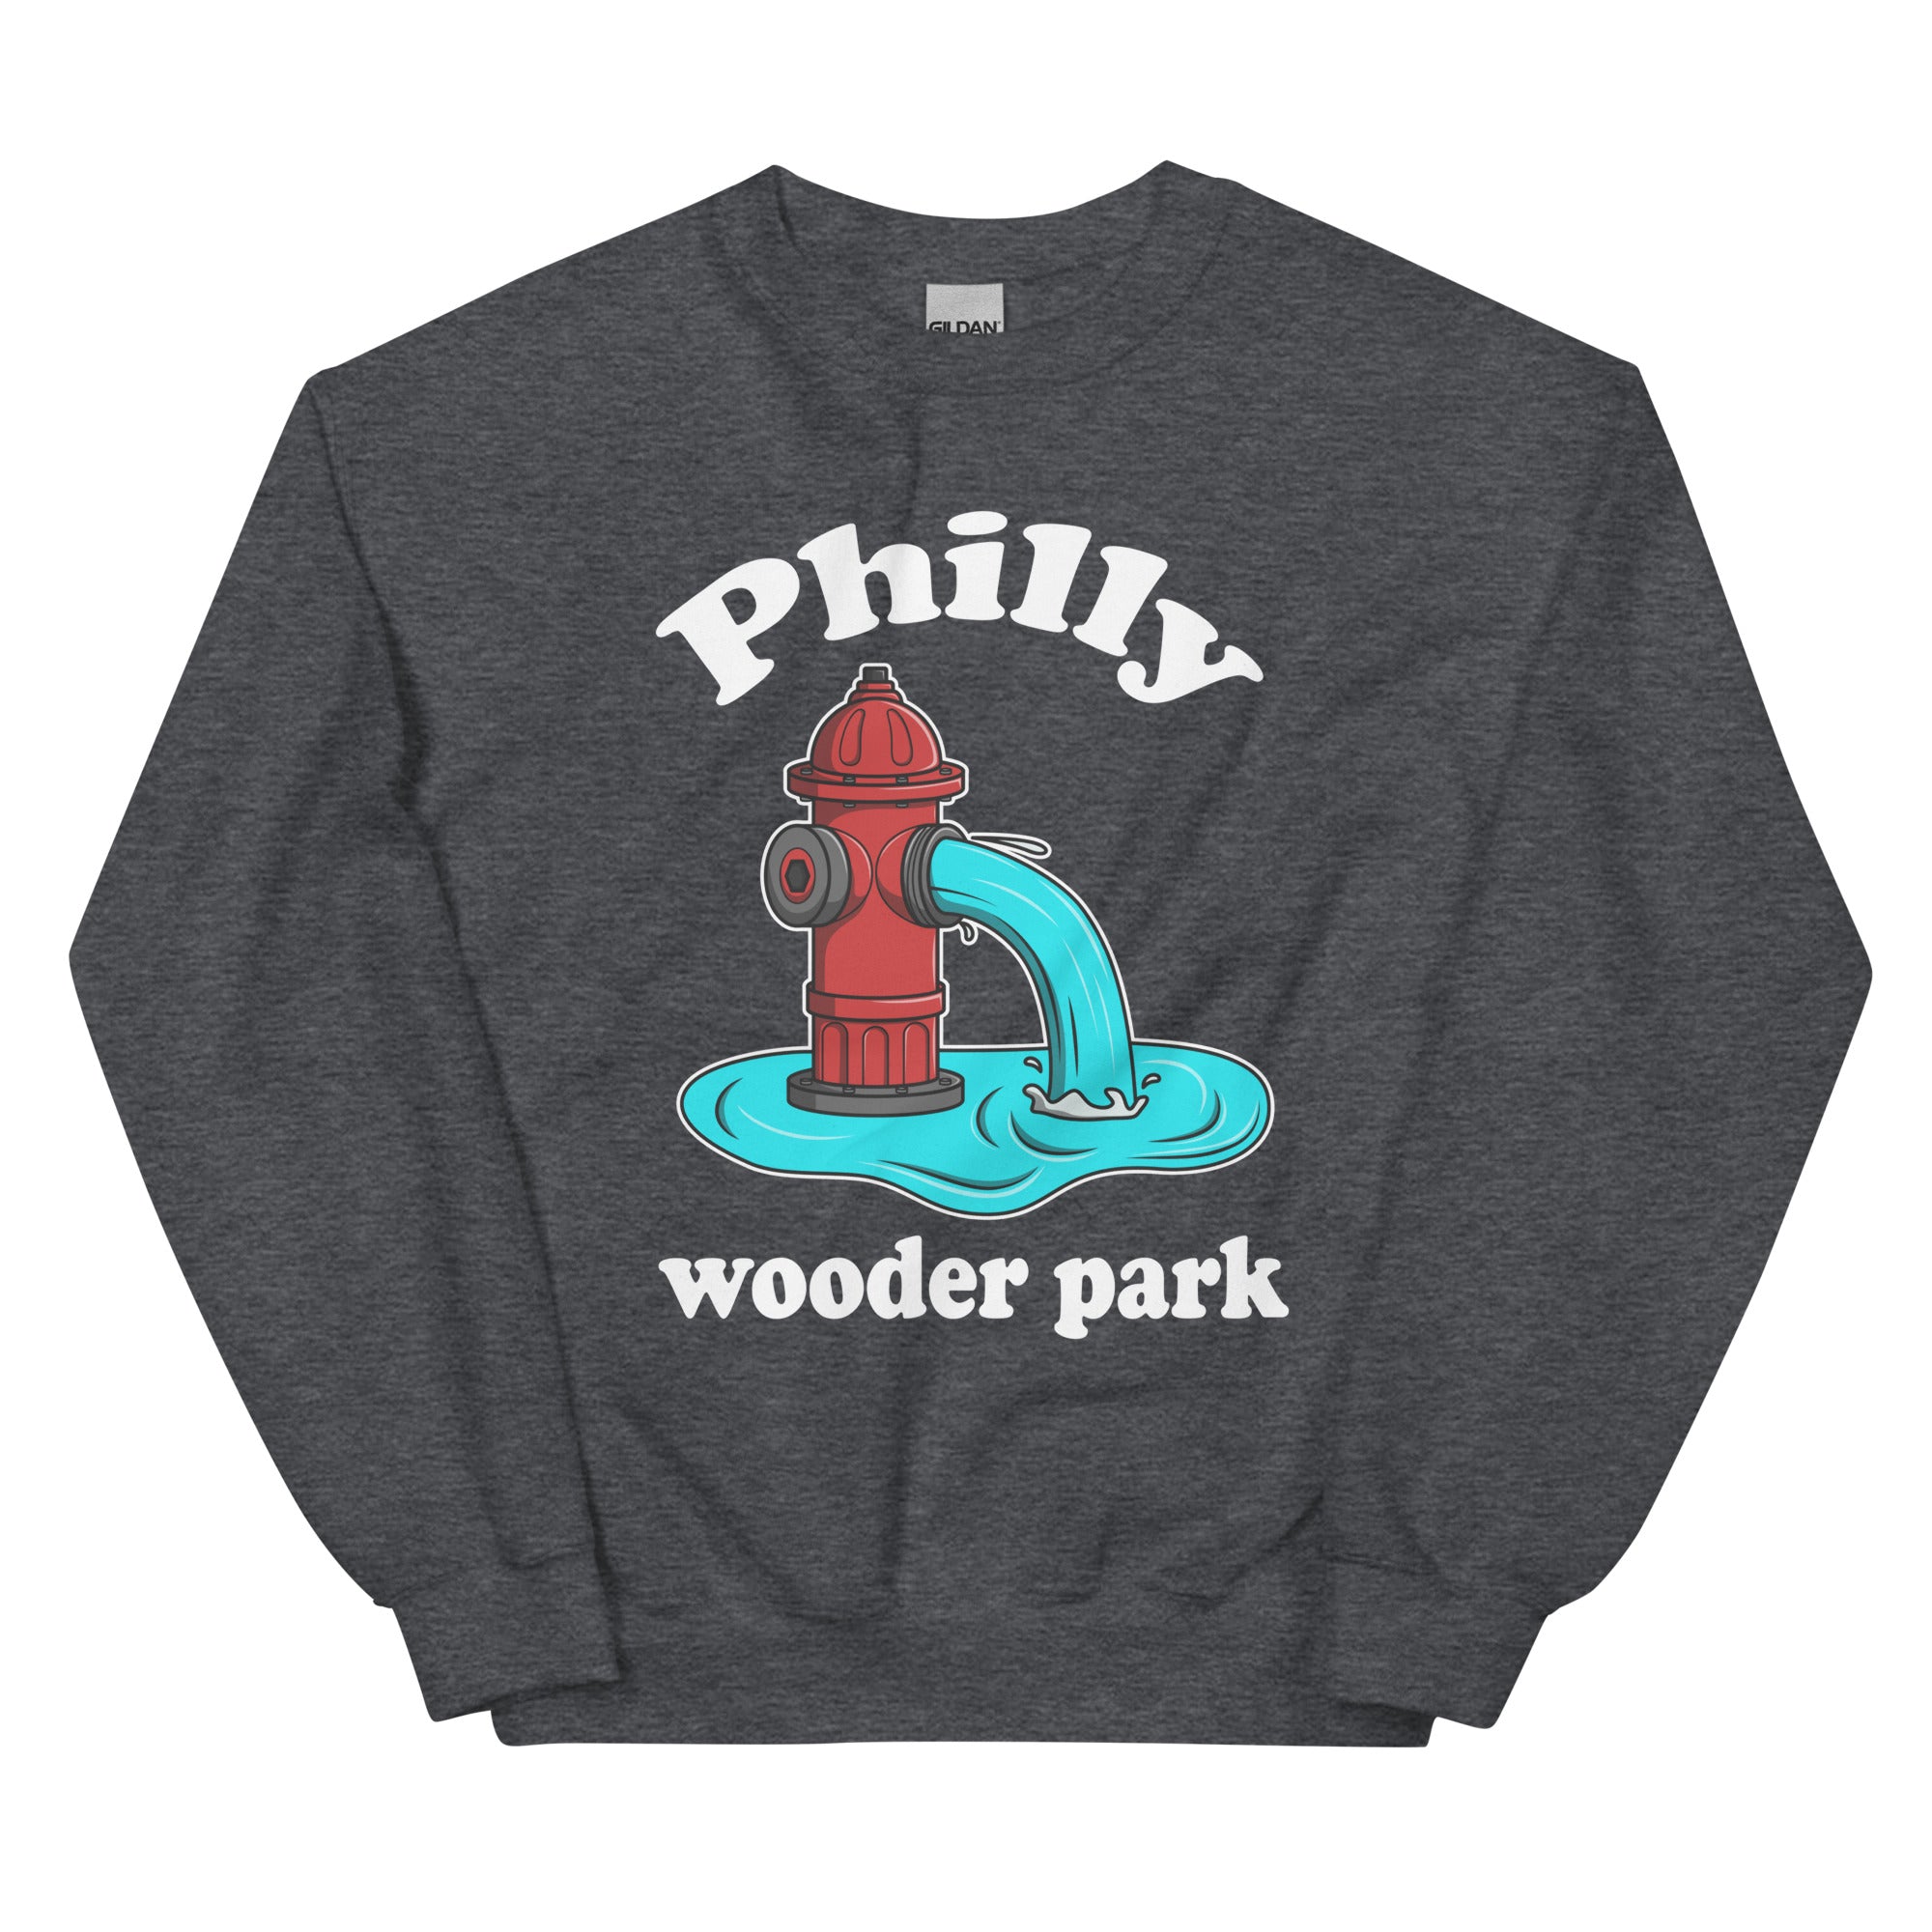 Philadelphia Philly wooder park fire hydrant funny dark heather grey sweatshirt Phillygoat